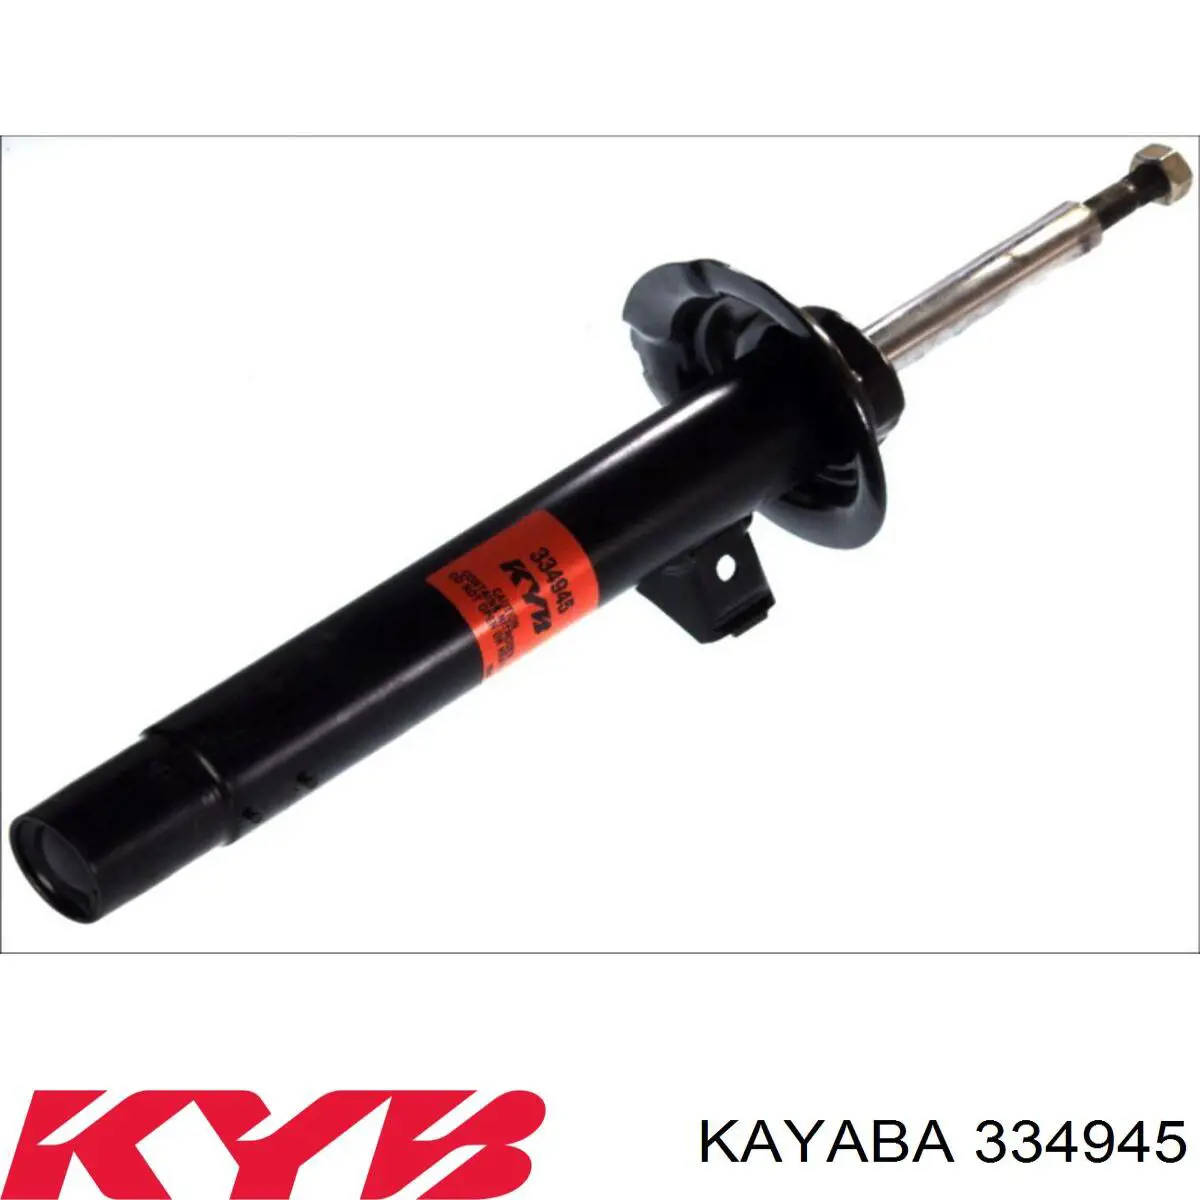 334945 Kayaba amortecedor dianteiro direito